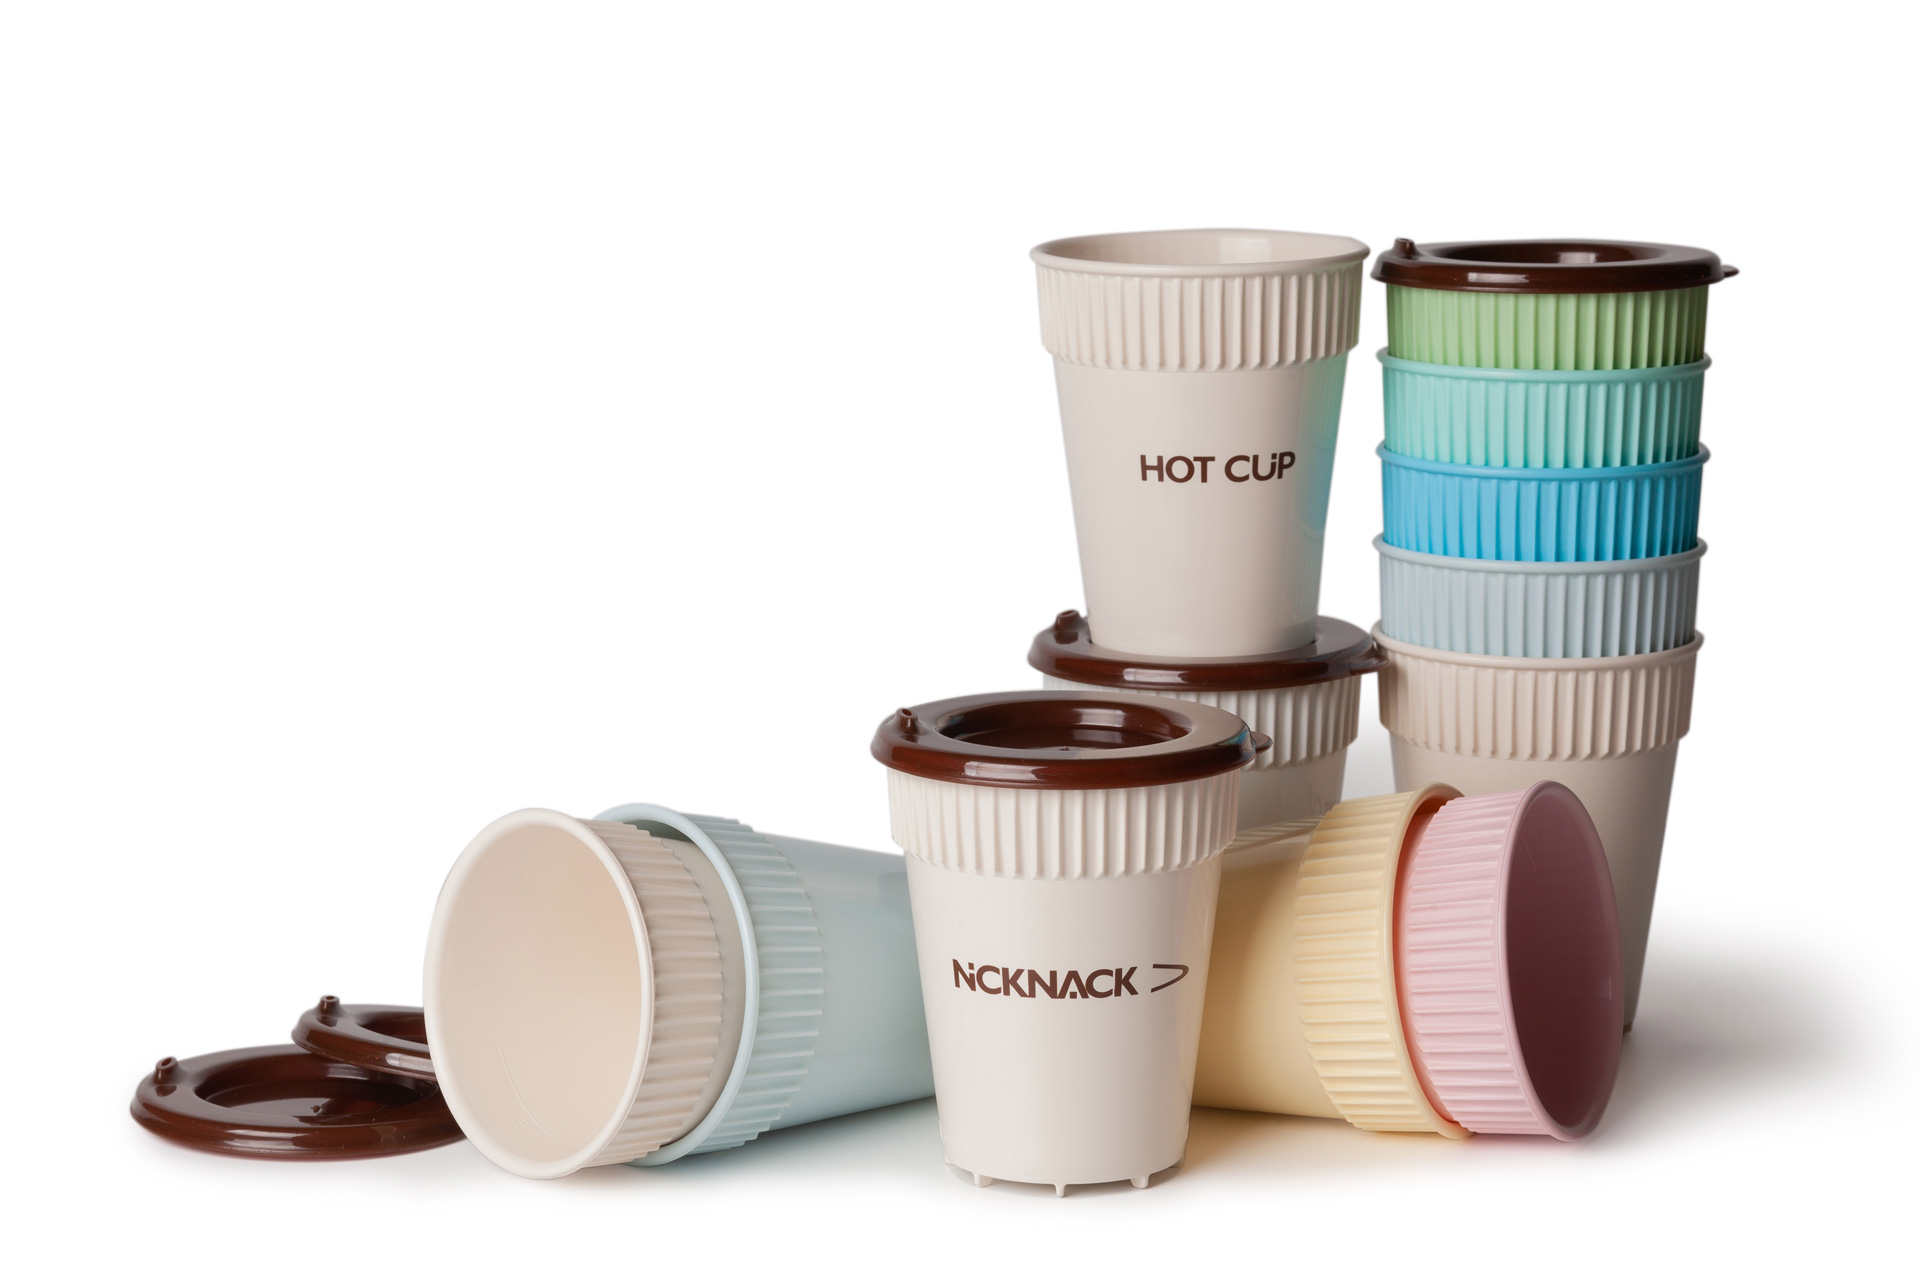 Nicknack HOT CUPs